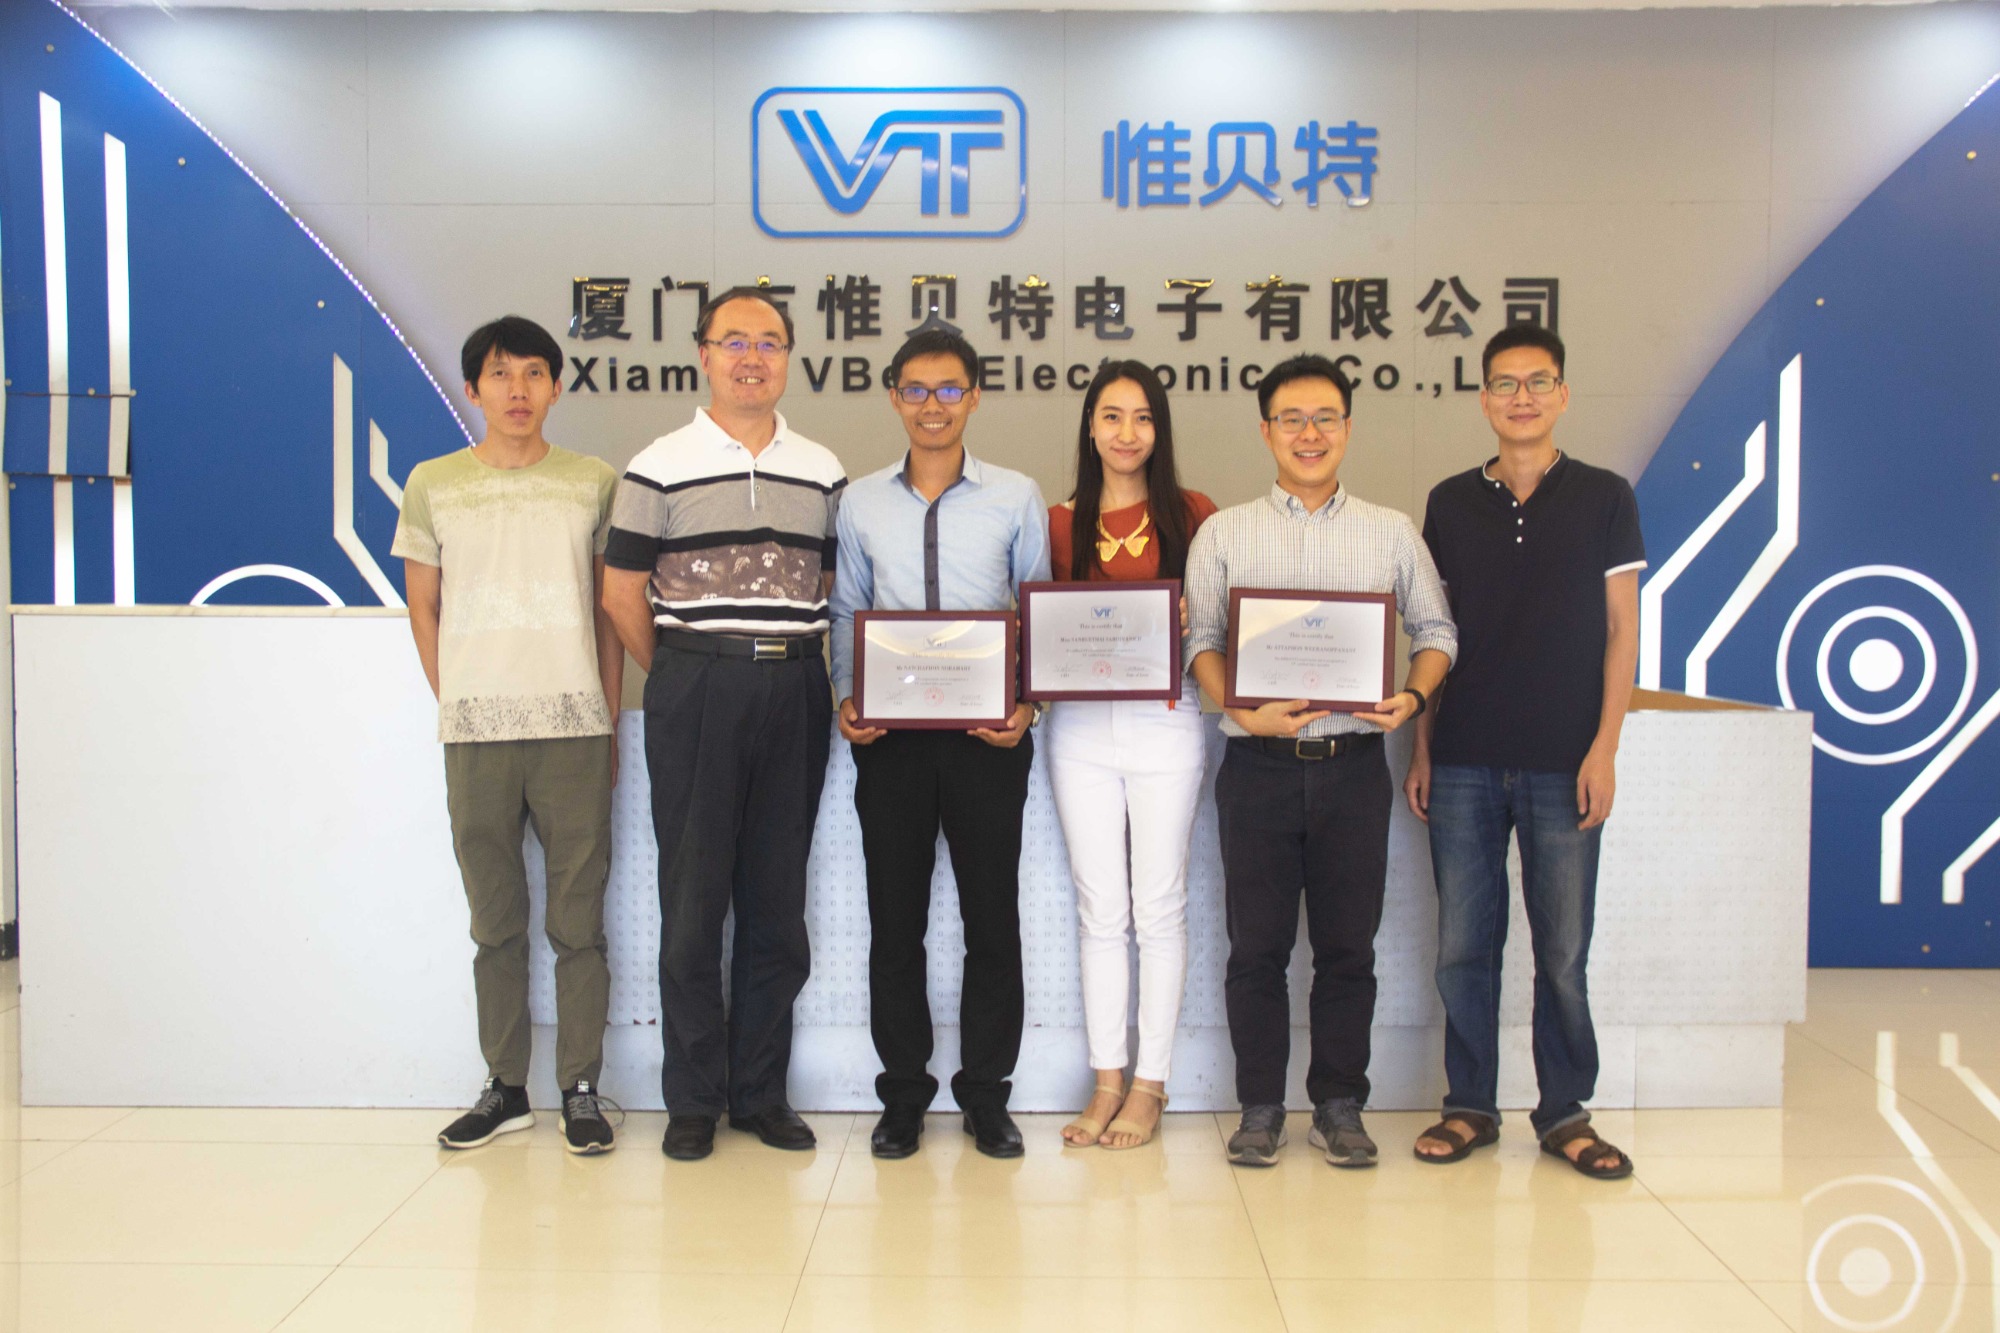 Thai Partner visited VT in Xiamen